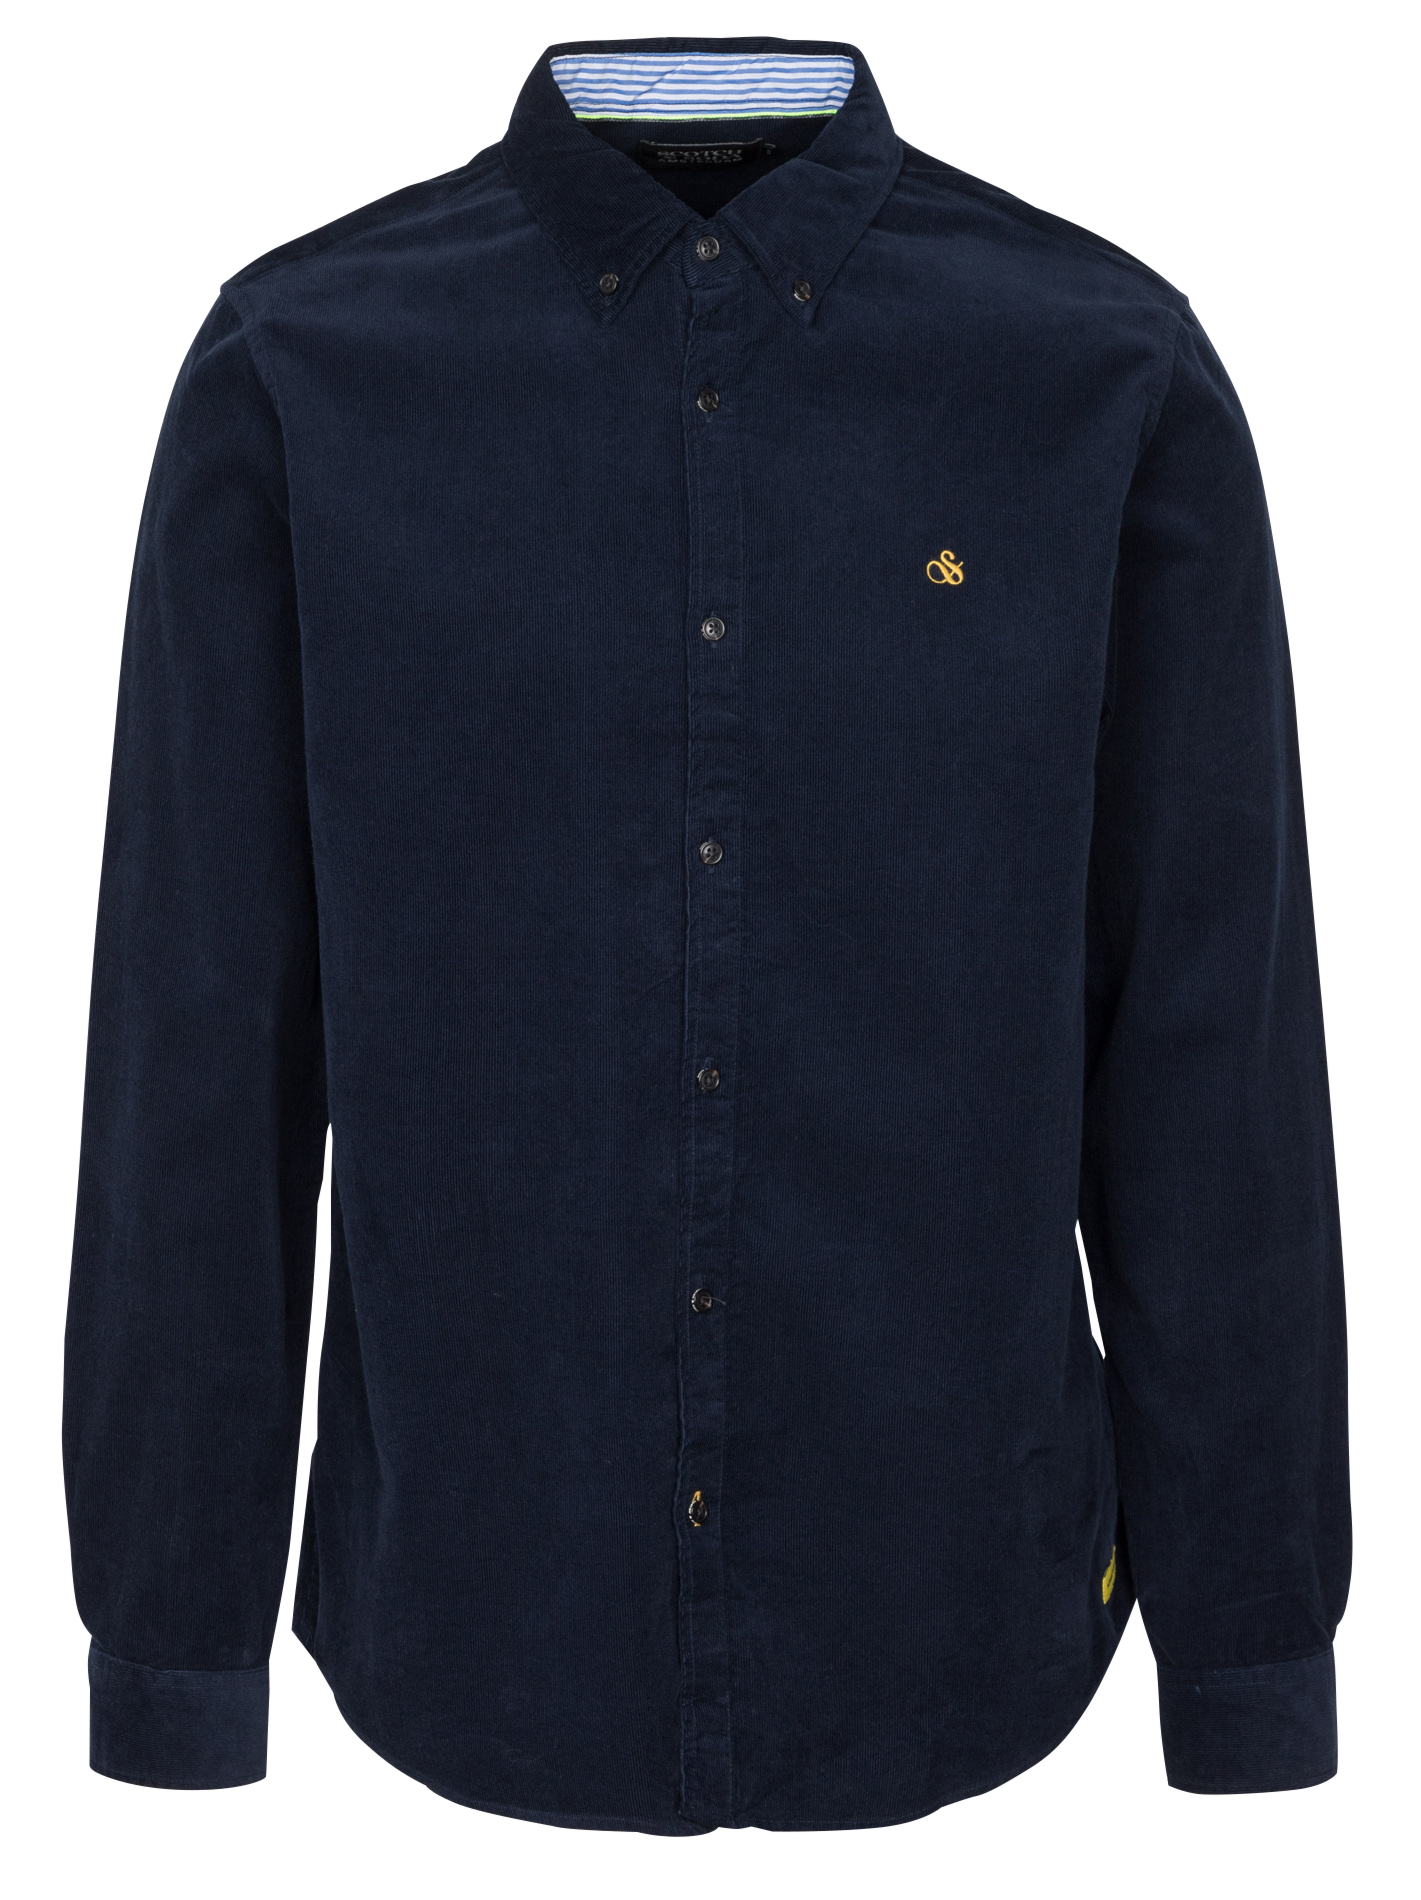 Clothing Mens Clothing Shirts & Tees Oxfords & Button Downs Men's Fashion Corduroy Shirt Cotton Autumn and Winter All-match Harajuku Button Up Shirt Jacket 